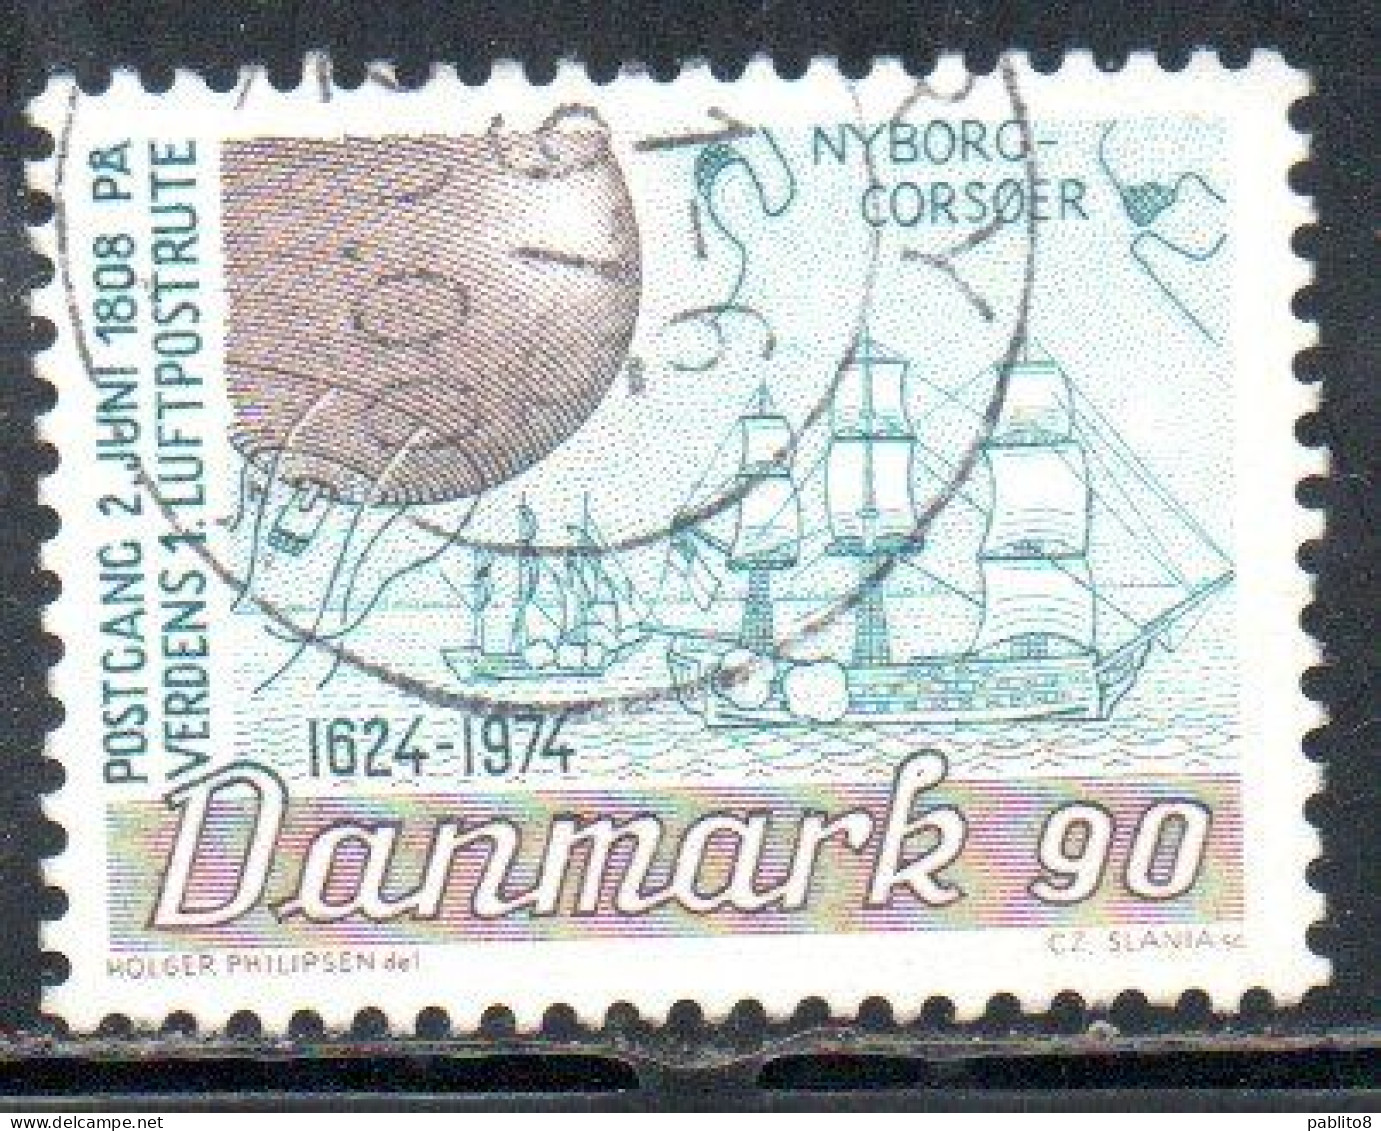 DANEMARK DANMARK DENMARK DANIMARCA 1974 DANISH PO POSTAL OFFICEBALLON AND SAILINF SHIPS 90o USED USATO OBLITERE' - Gebraucht